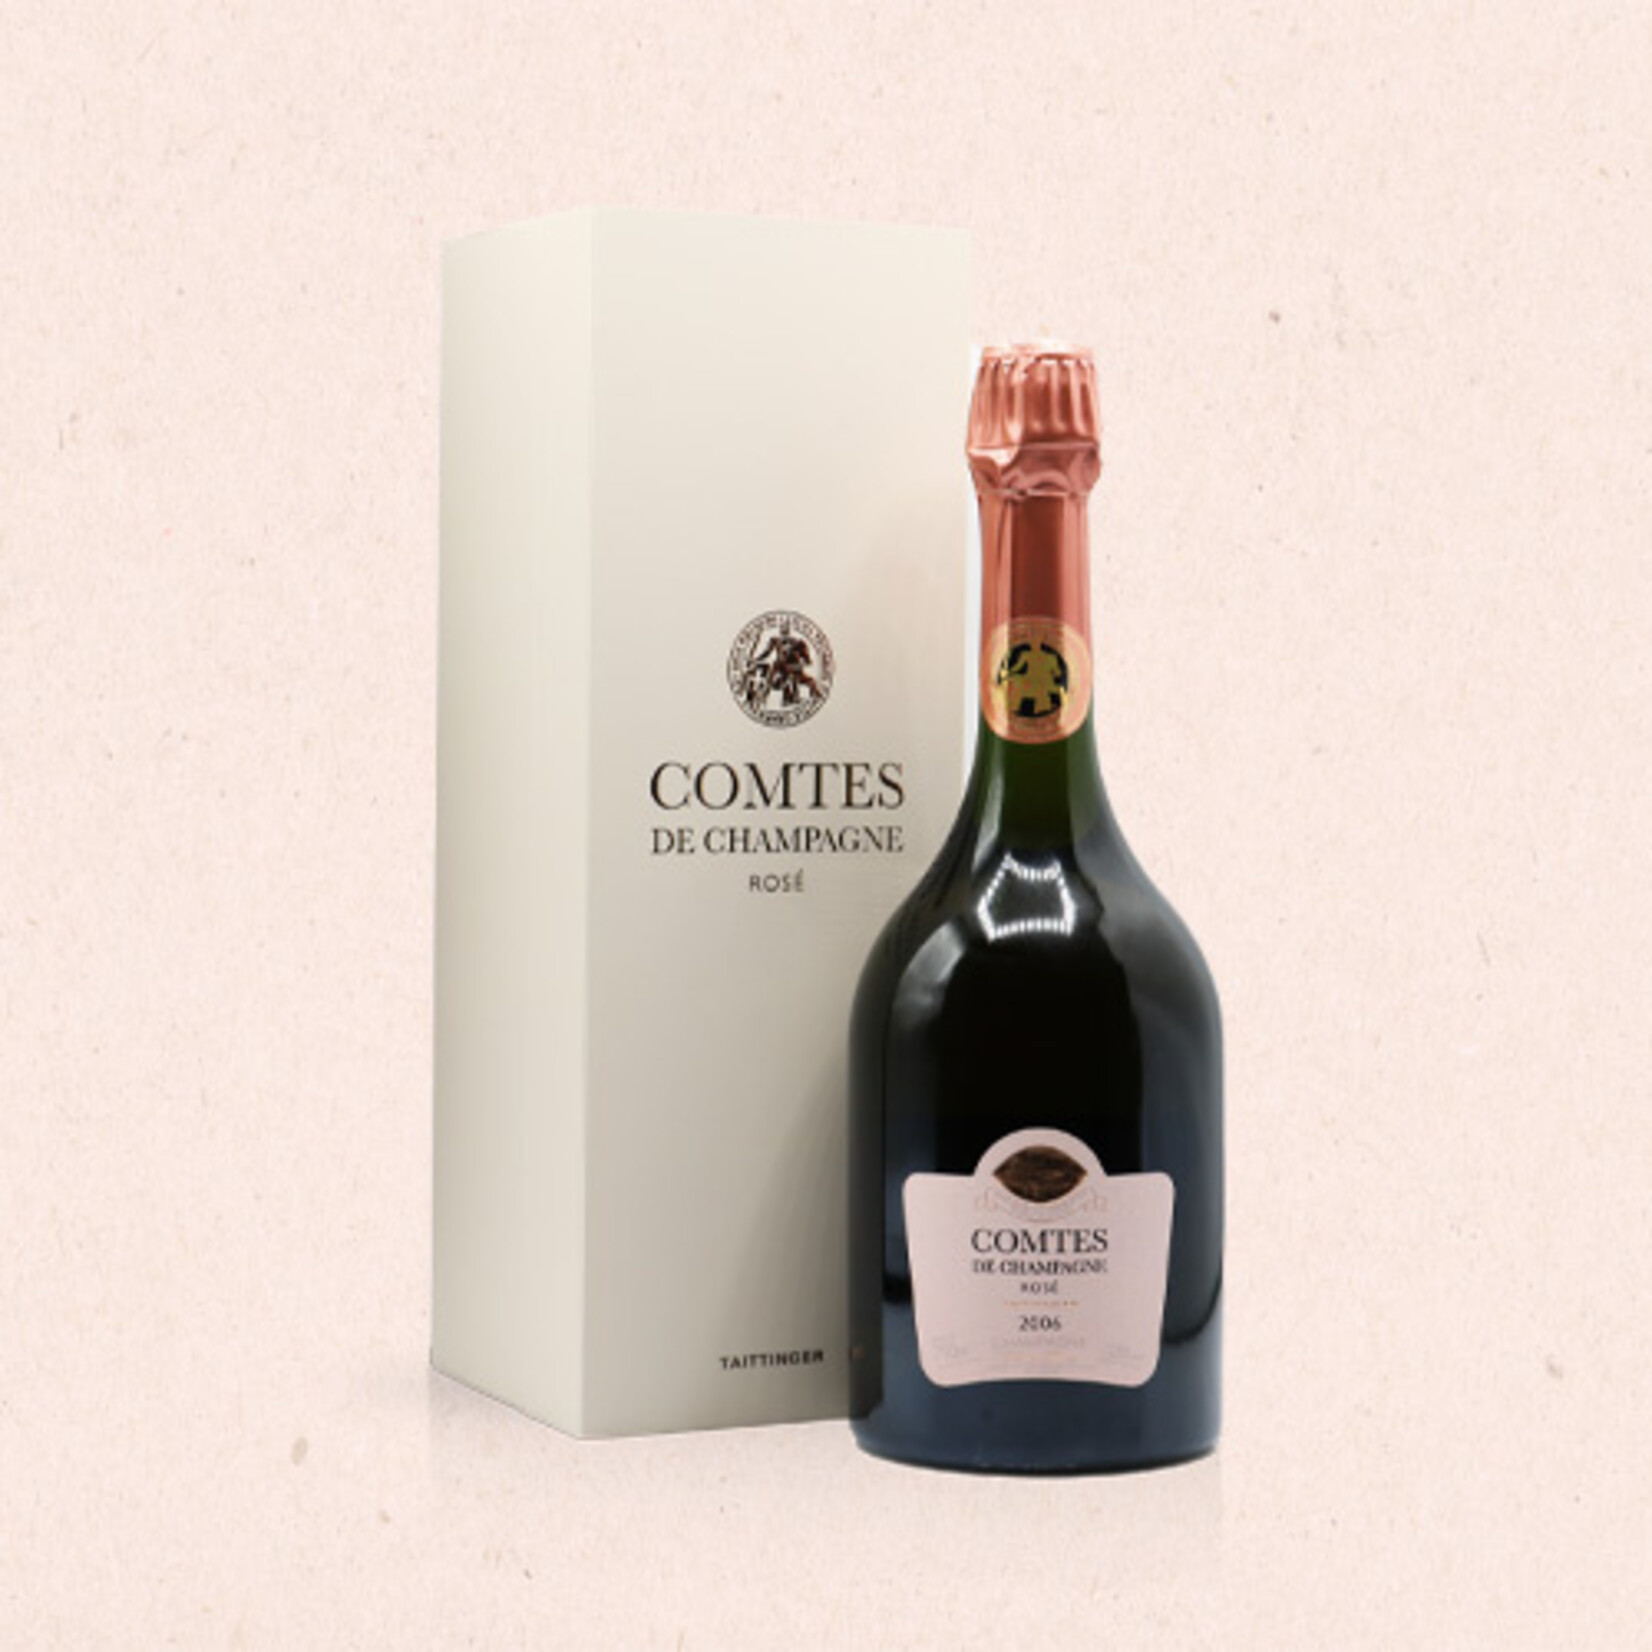 Taittinger Comtes de Champagne 2006 rose (giftbox)